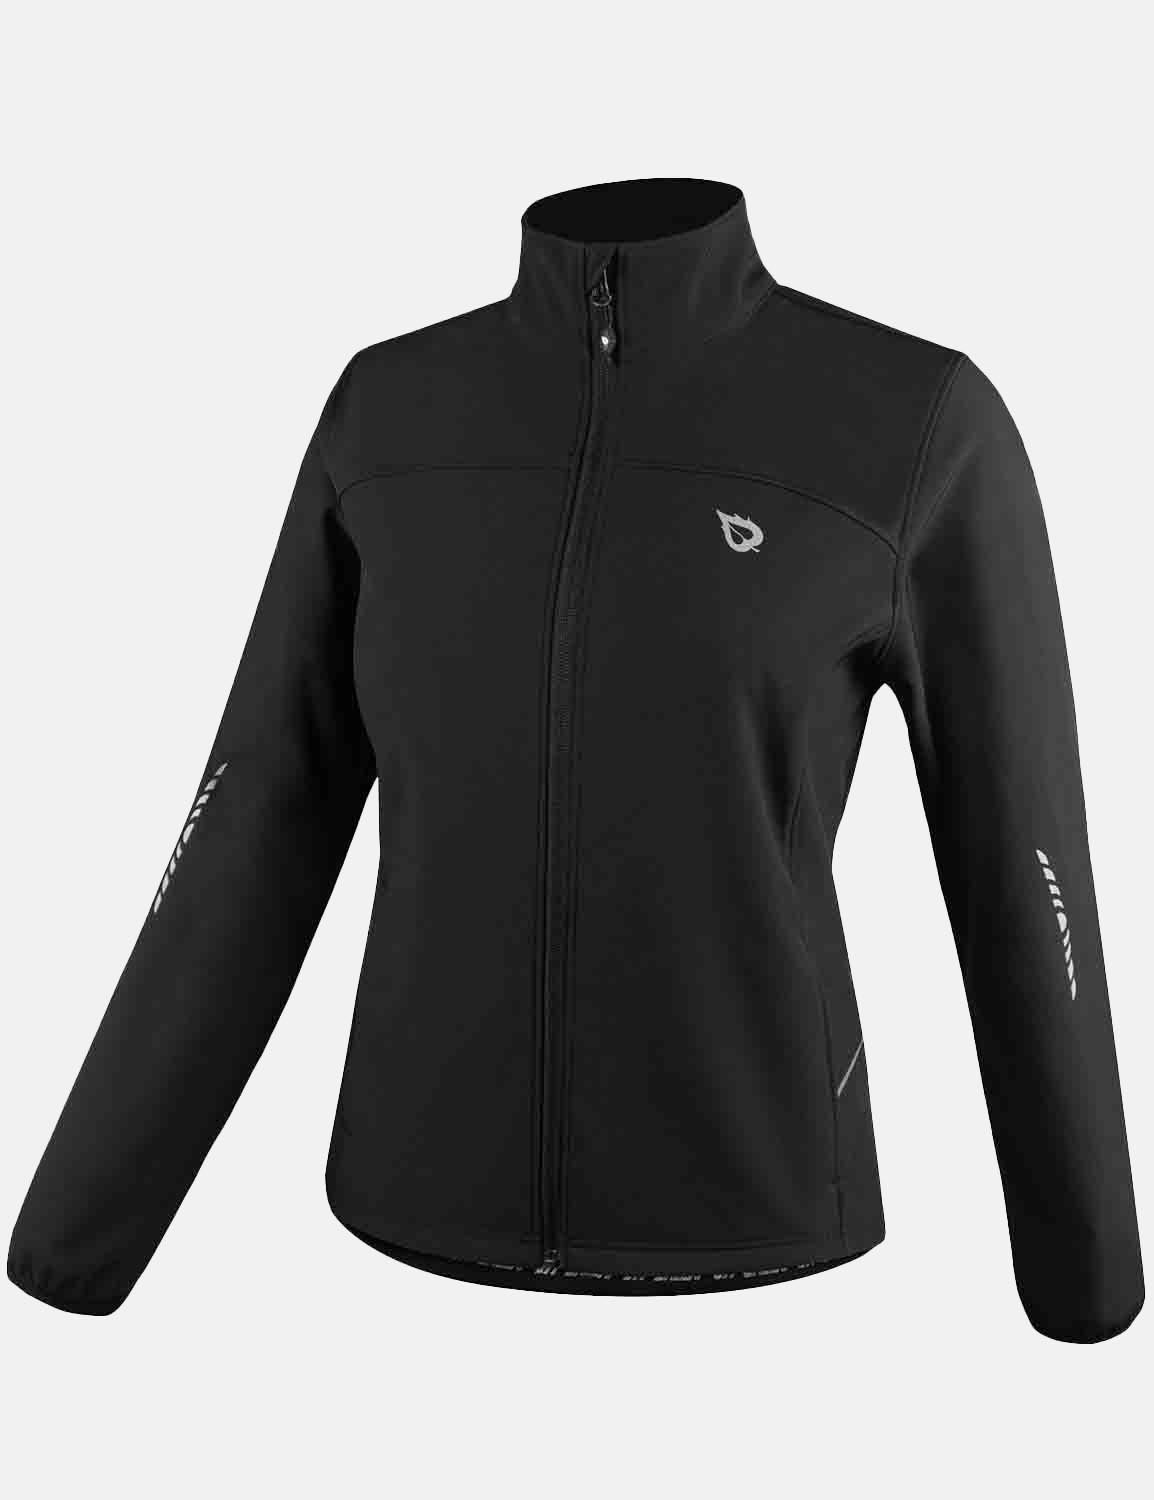 Baleaf Women's Wind- & Waterproof Thermal Long Sleeved Cycling Jacket aaa464 Black Side